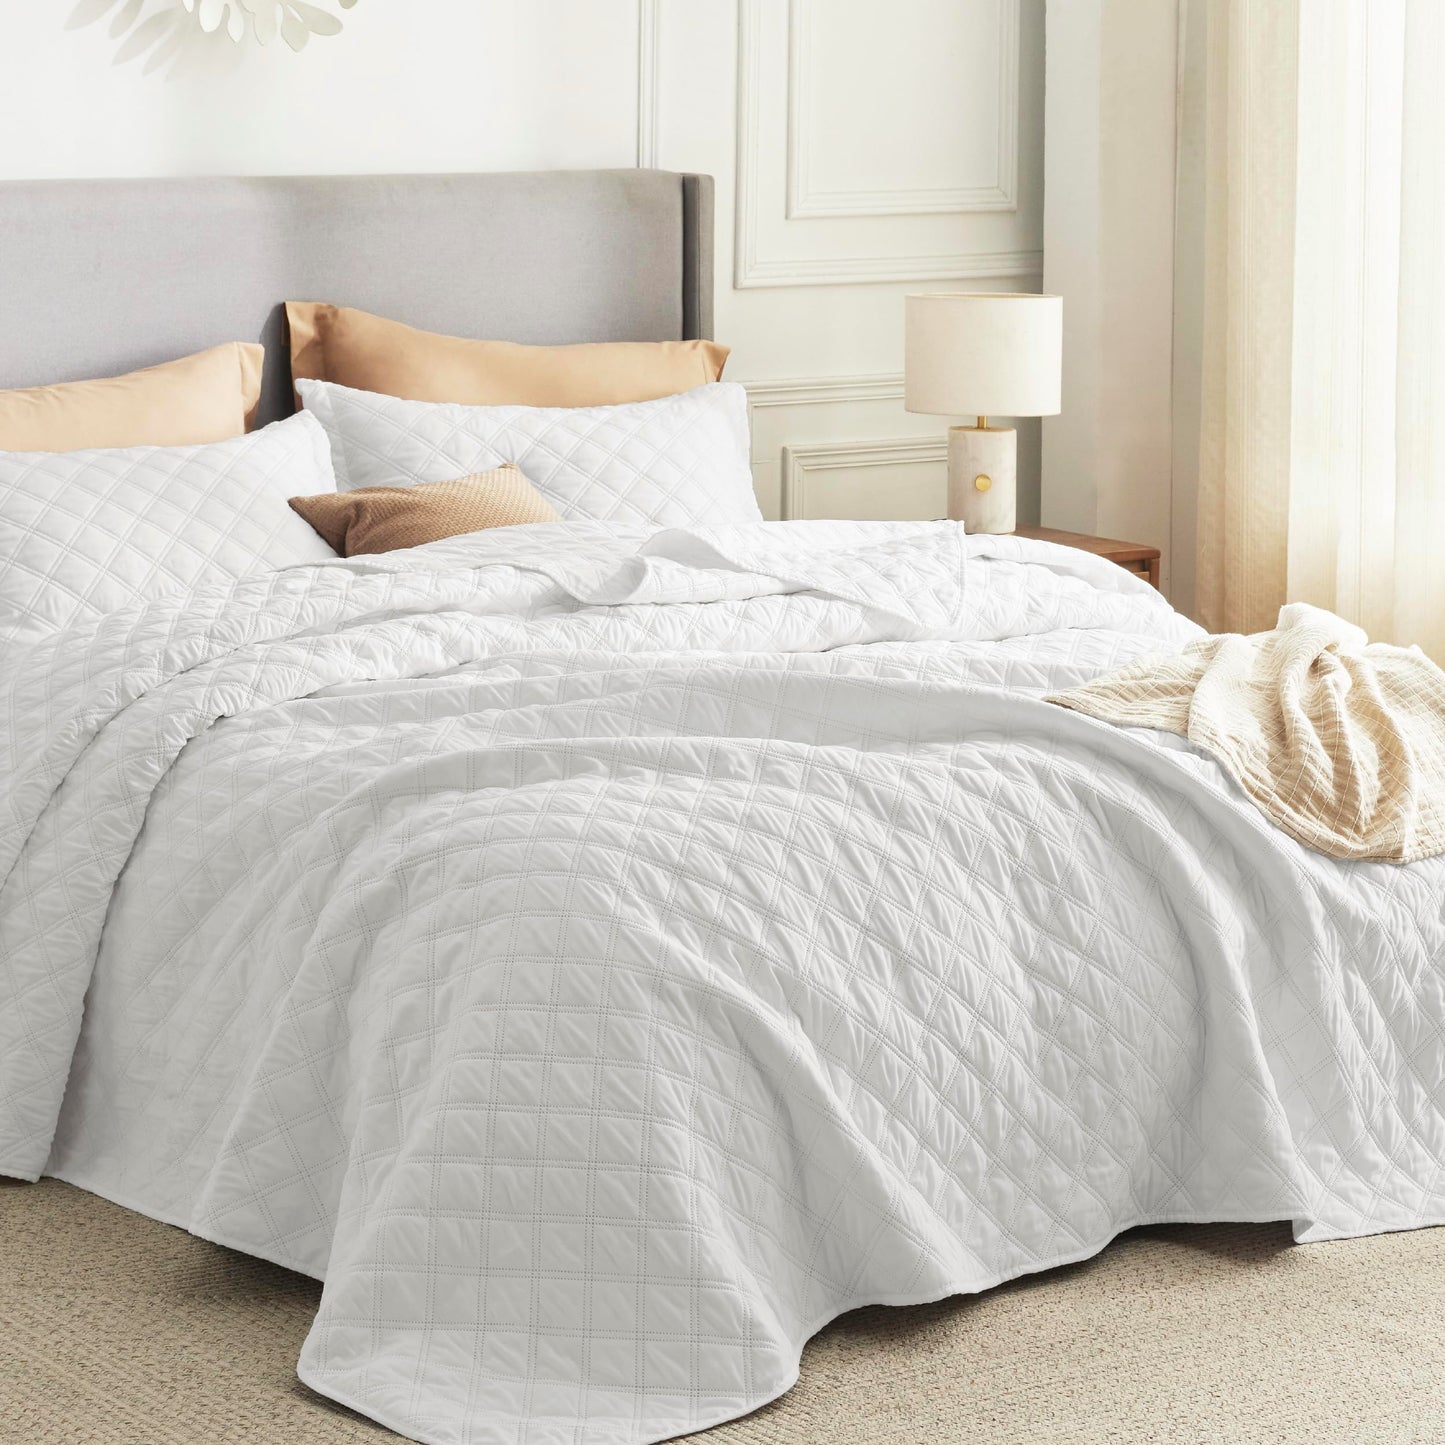 Bedsure Queen Quilt Bedding Set - Soft Ultrasonic Full/Queen Quilt Set - Diamond Bedspread Queen Size - Lightweight Bedding Coverlet for All Seasons (Includes 1 White Quilt, 2 Pillow Shams)